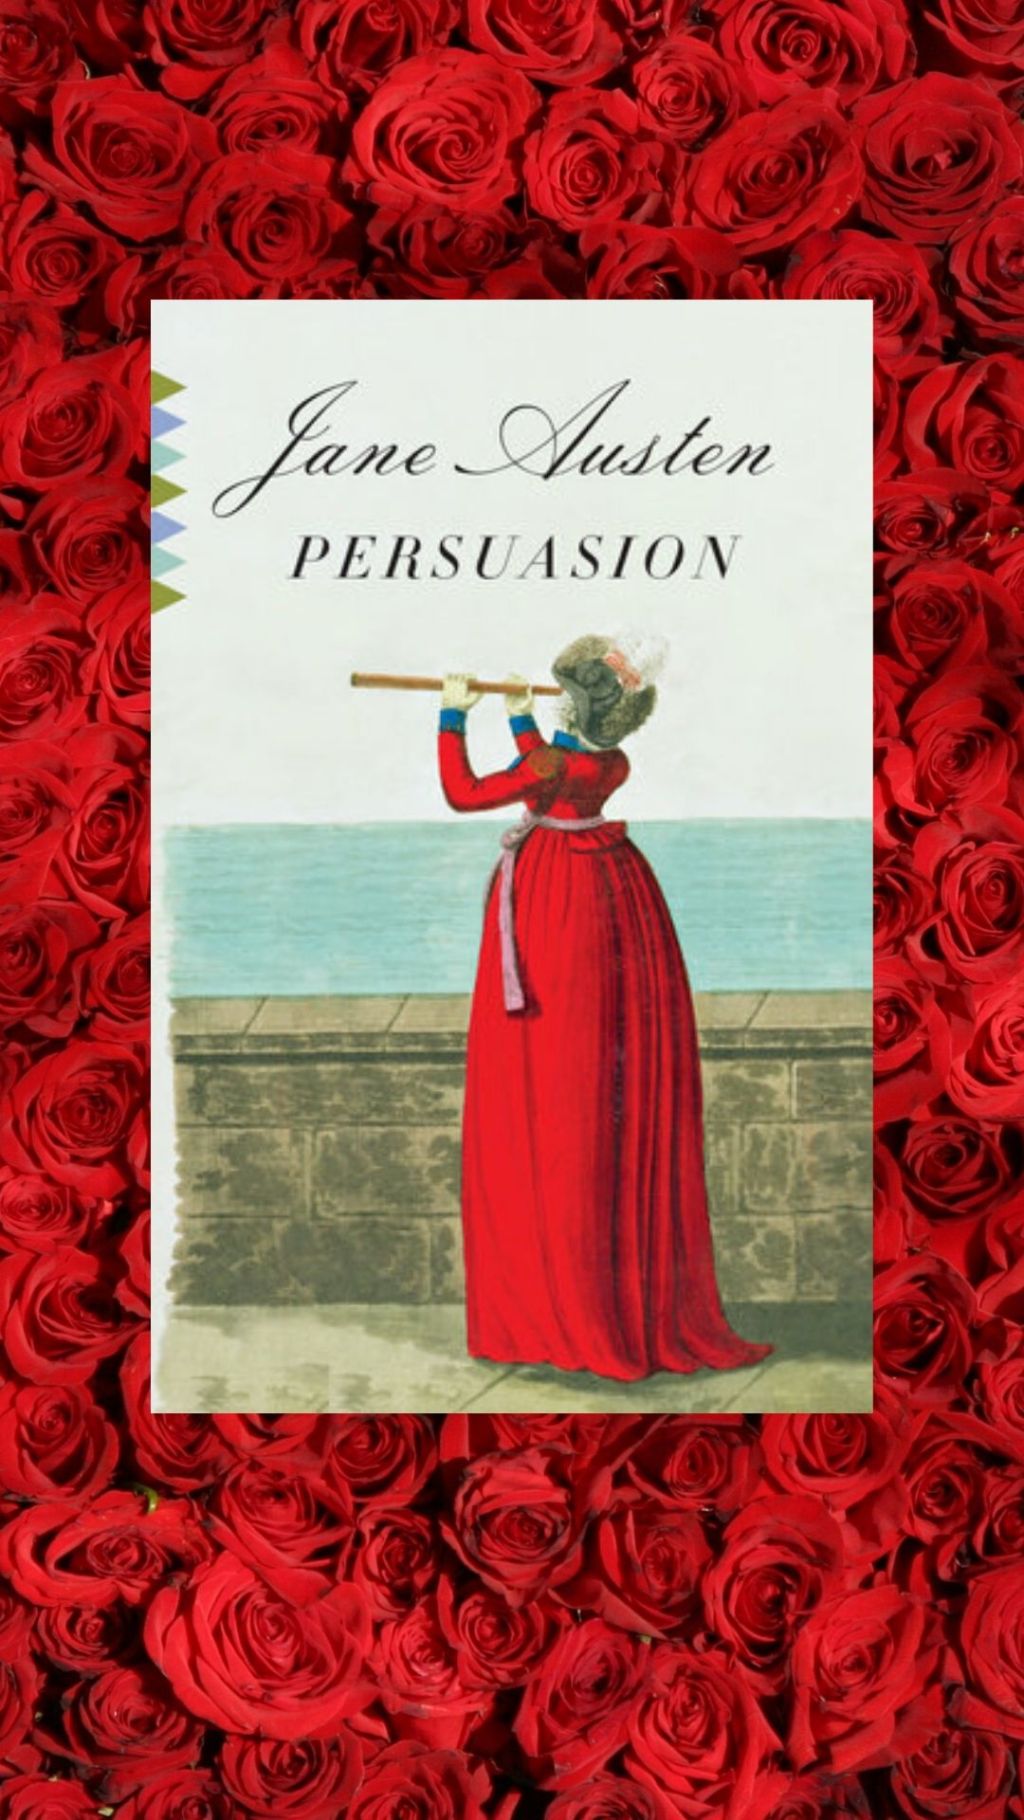 Persuasion by Jane Austen